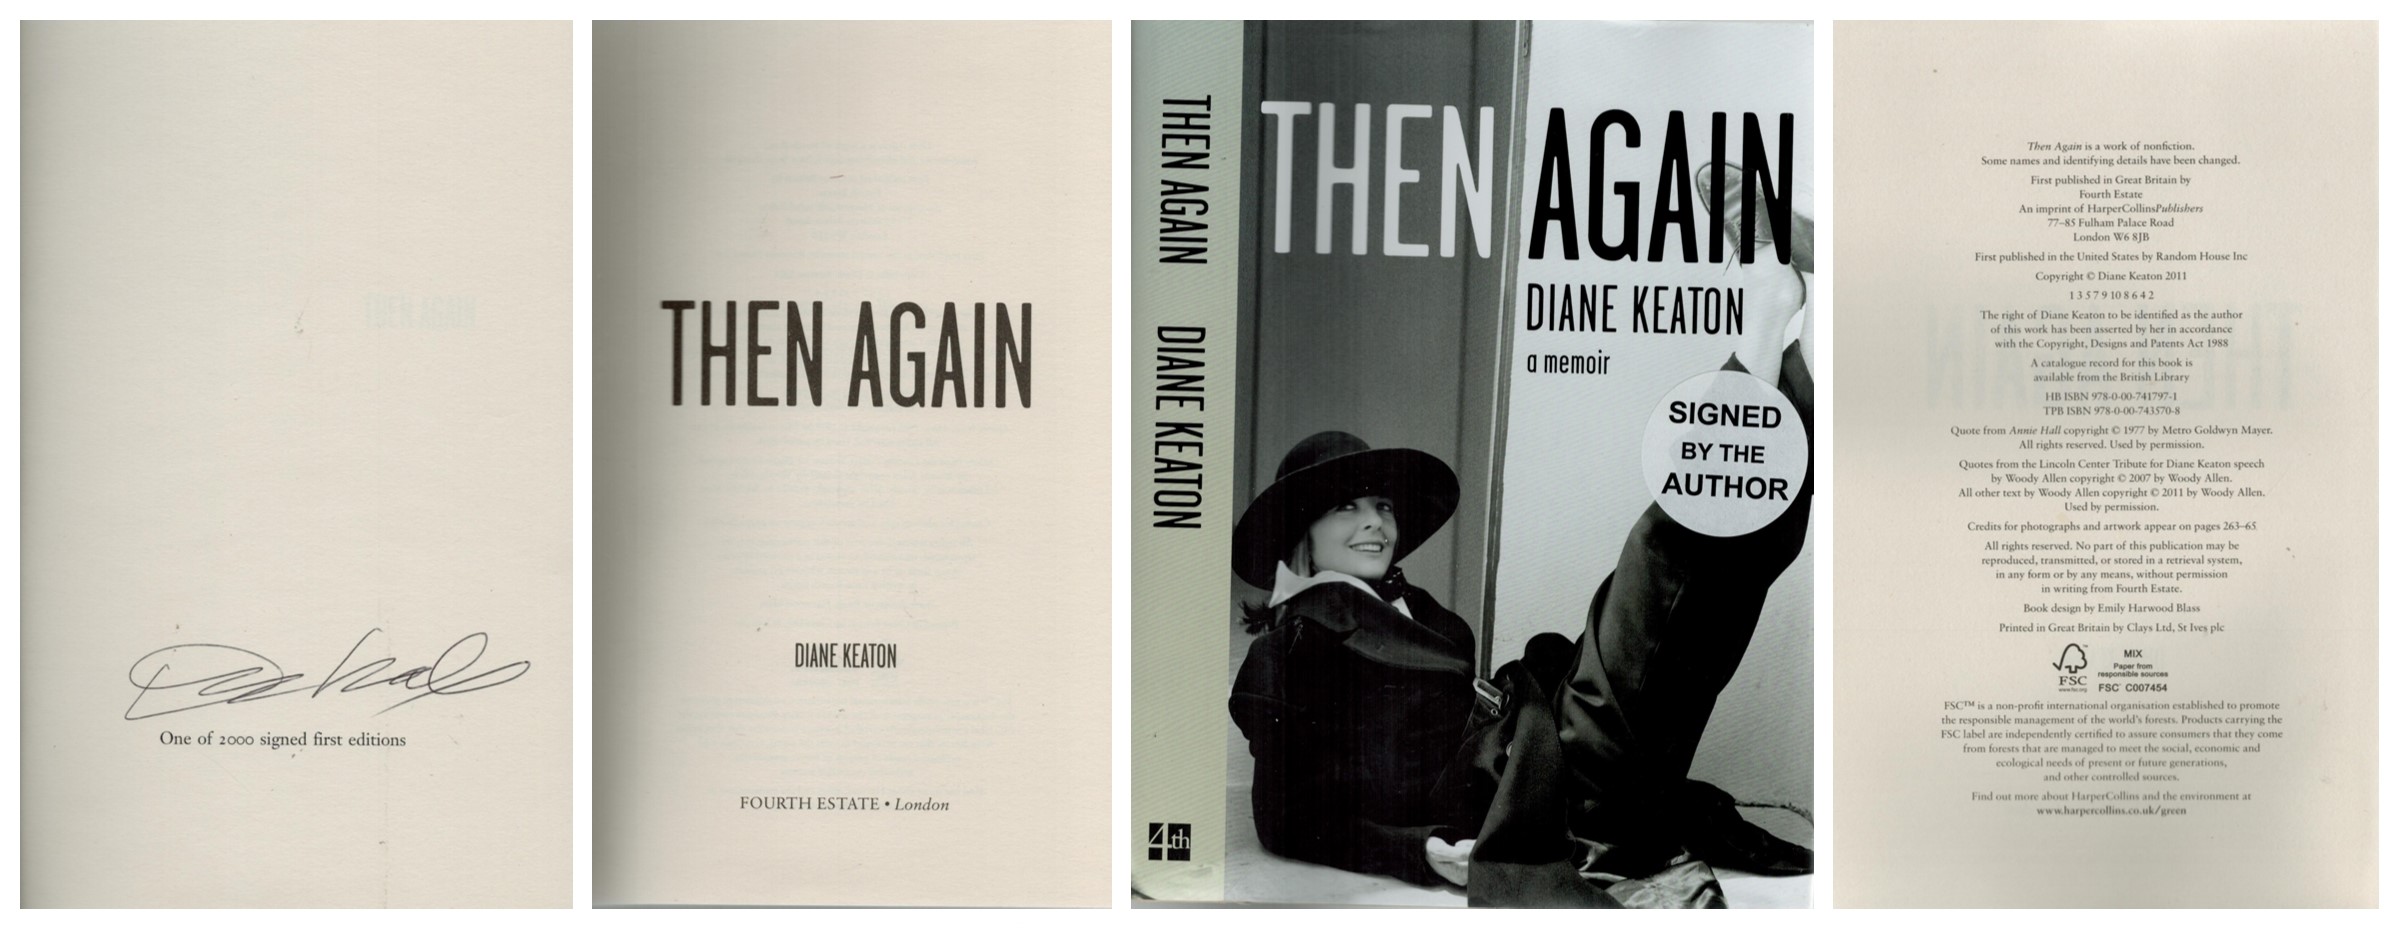 Diane Keaton signed Hardback Book Then Again Diane Keaton a memoir. One of 2000 signed first